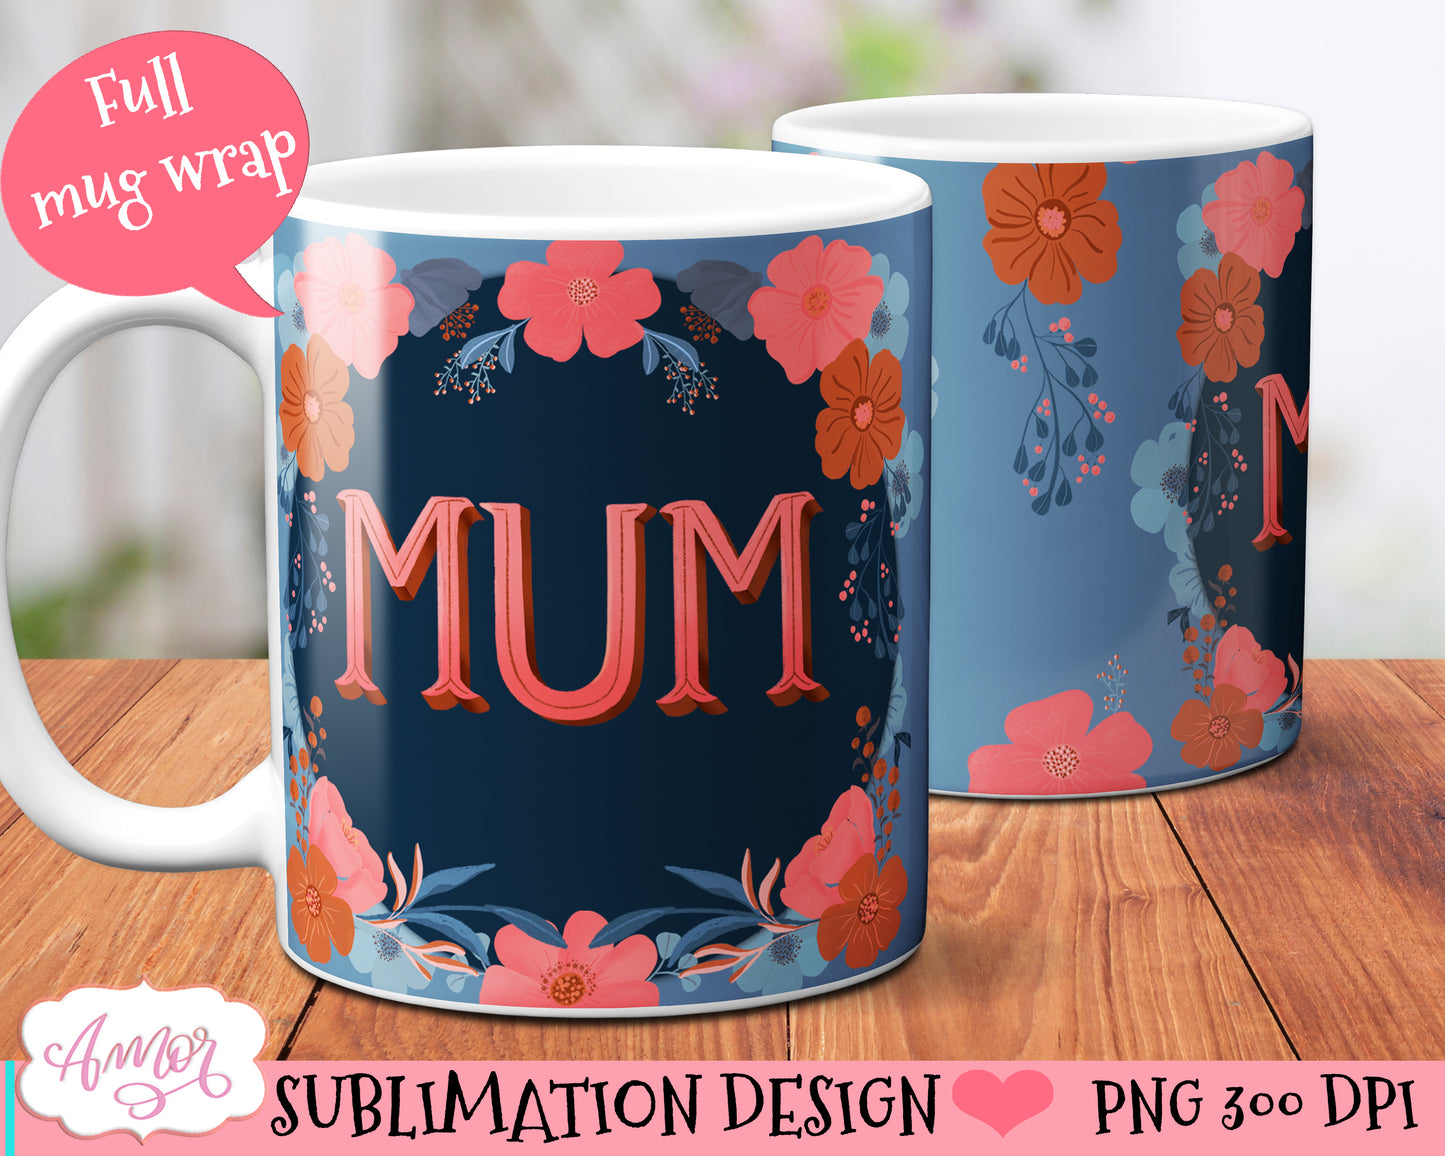 Mum mug wrap PNG| Mother's day sublimation design for mugs